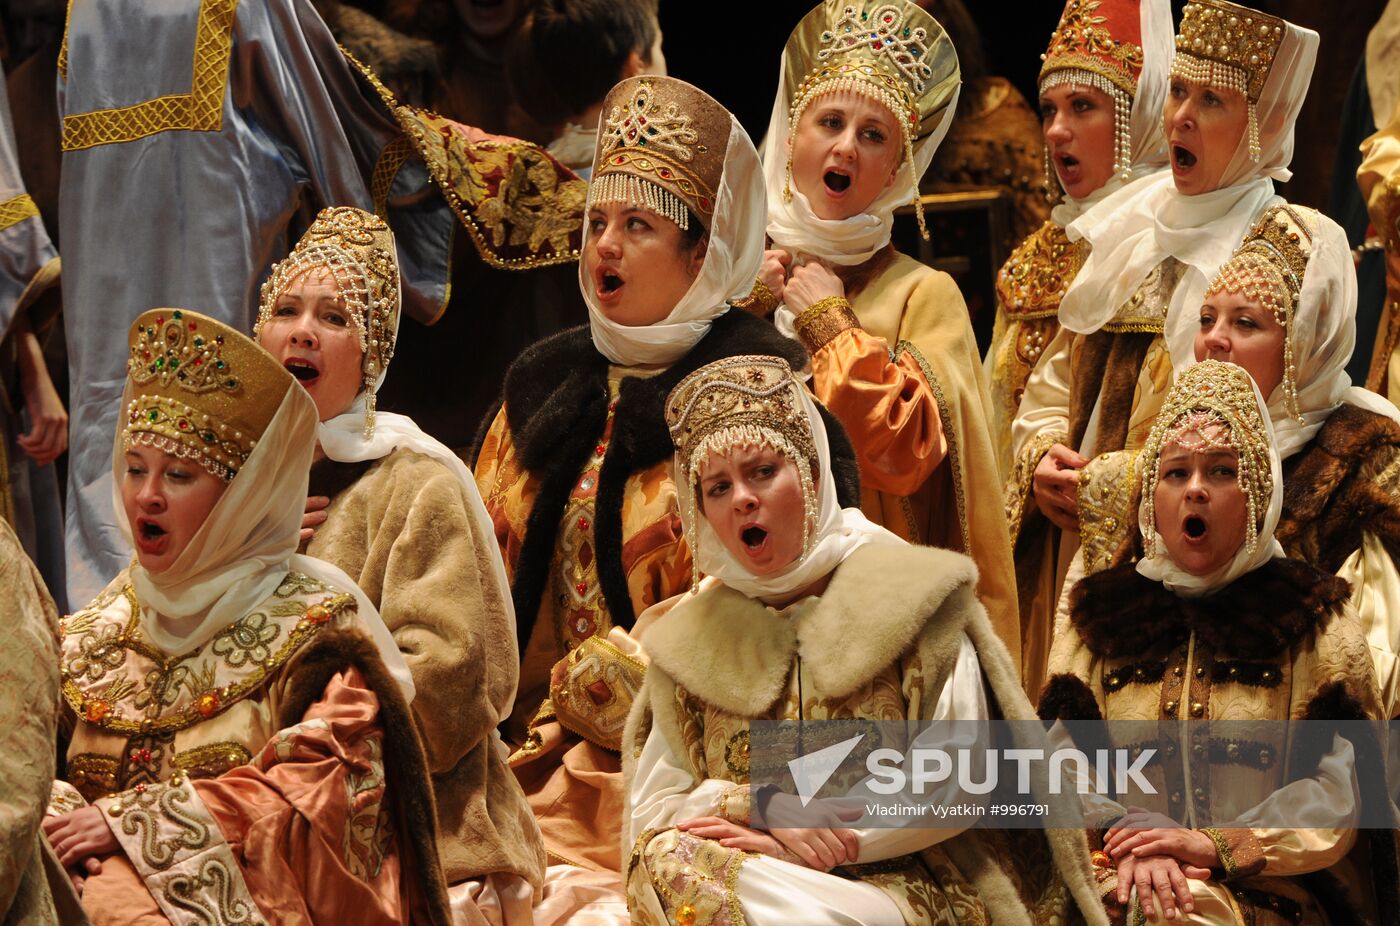 Dress rehearsal of opera "Boris Godunov" at Bolshoi Theatre